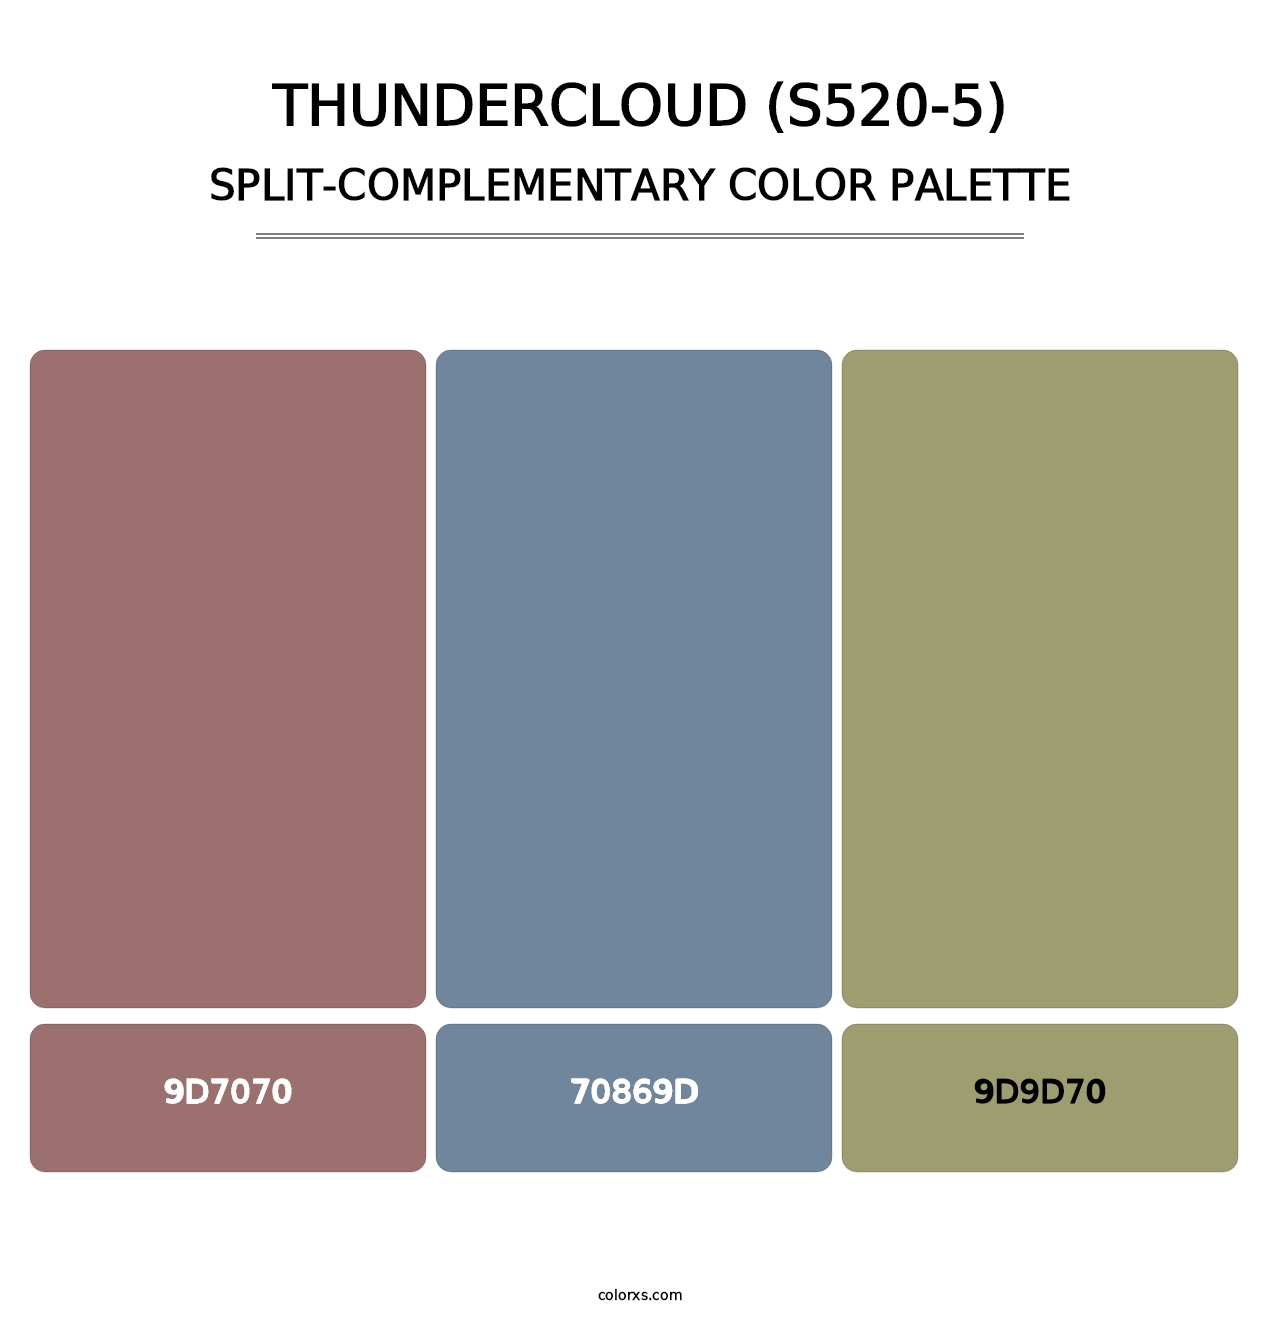 Thundercloud (S520-5) - Split-Complementary Color Palette